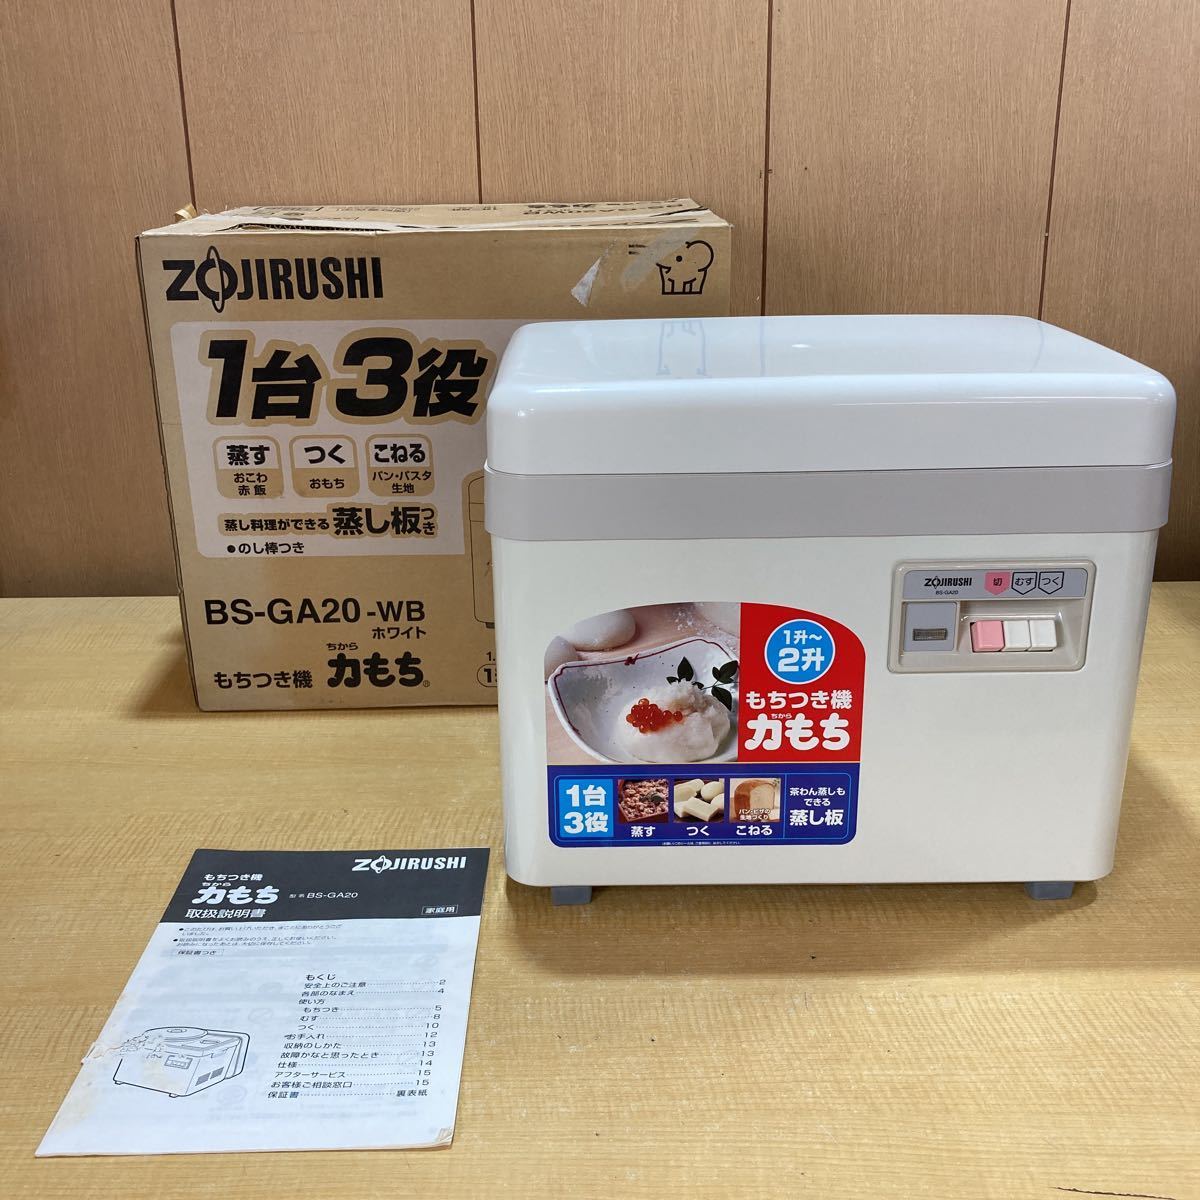 ZOJIRUSHI BS-GA20-WB ホワイト 2升 もちつき機 力もち 蒸す/つく/こねる 1台3役 餅つき機 象印